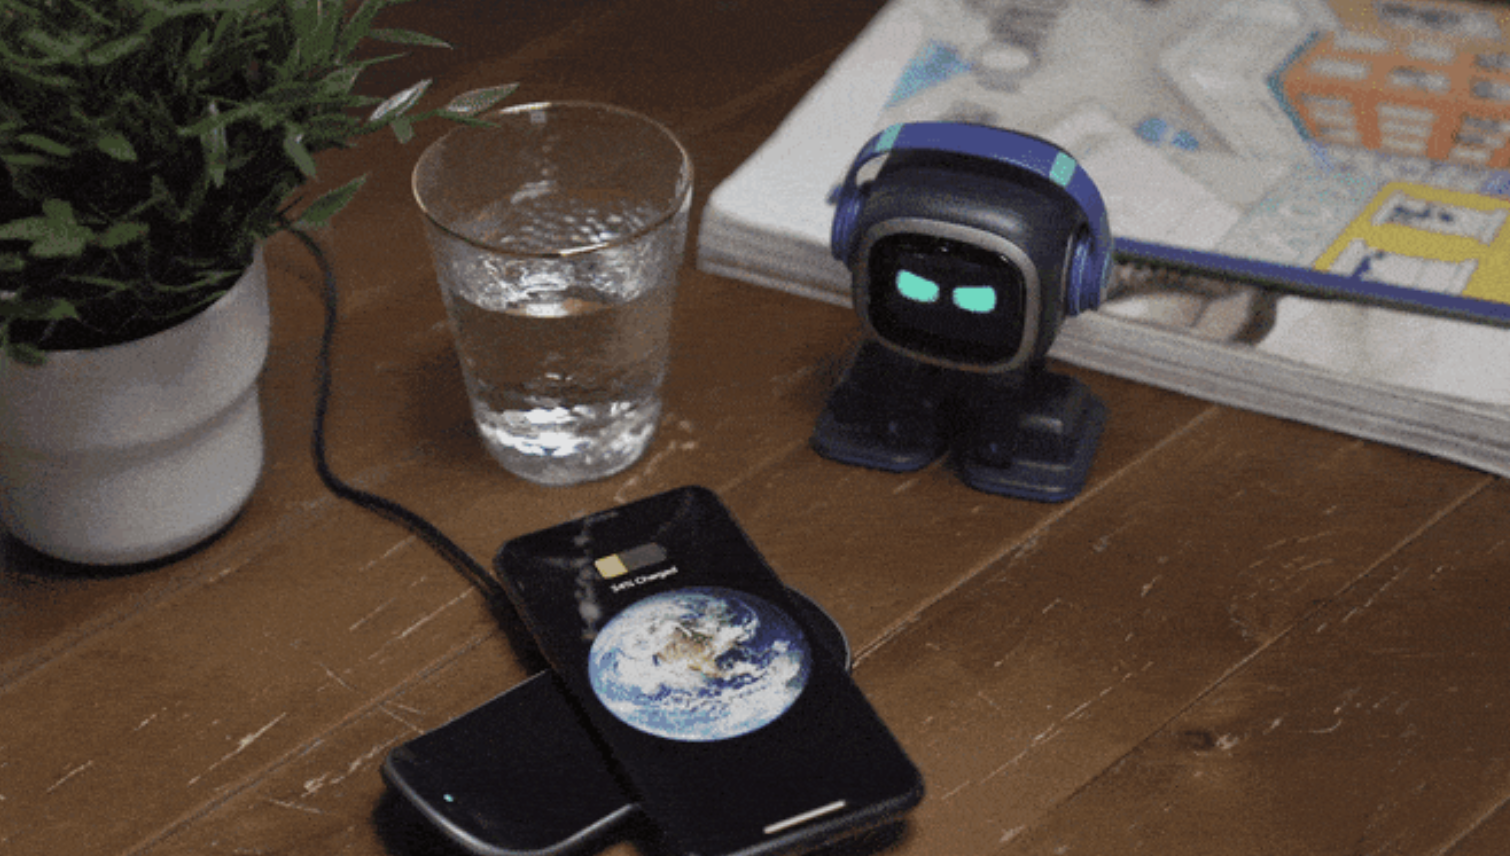 EMO- The New A.I. Robot Companion - Hashtag Magazine